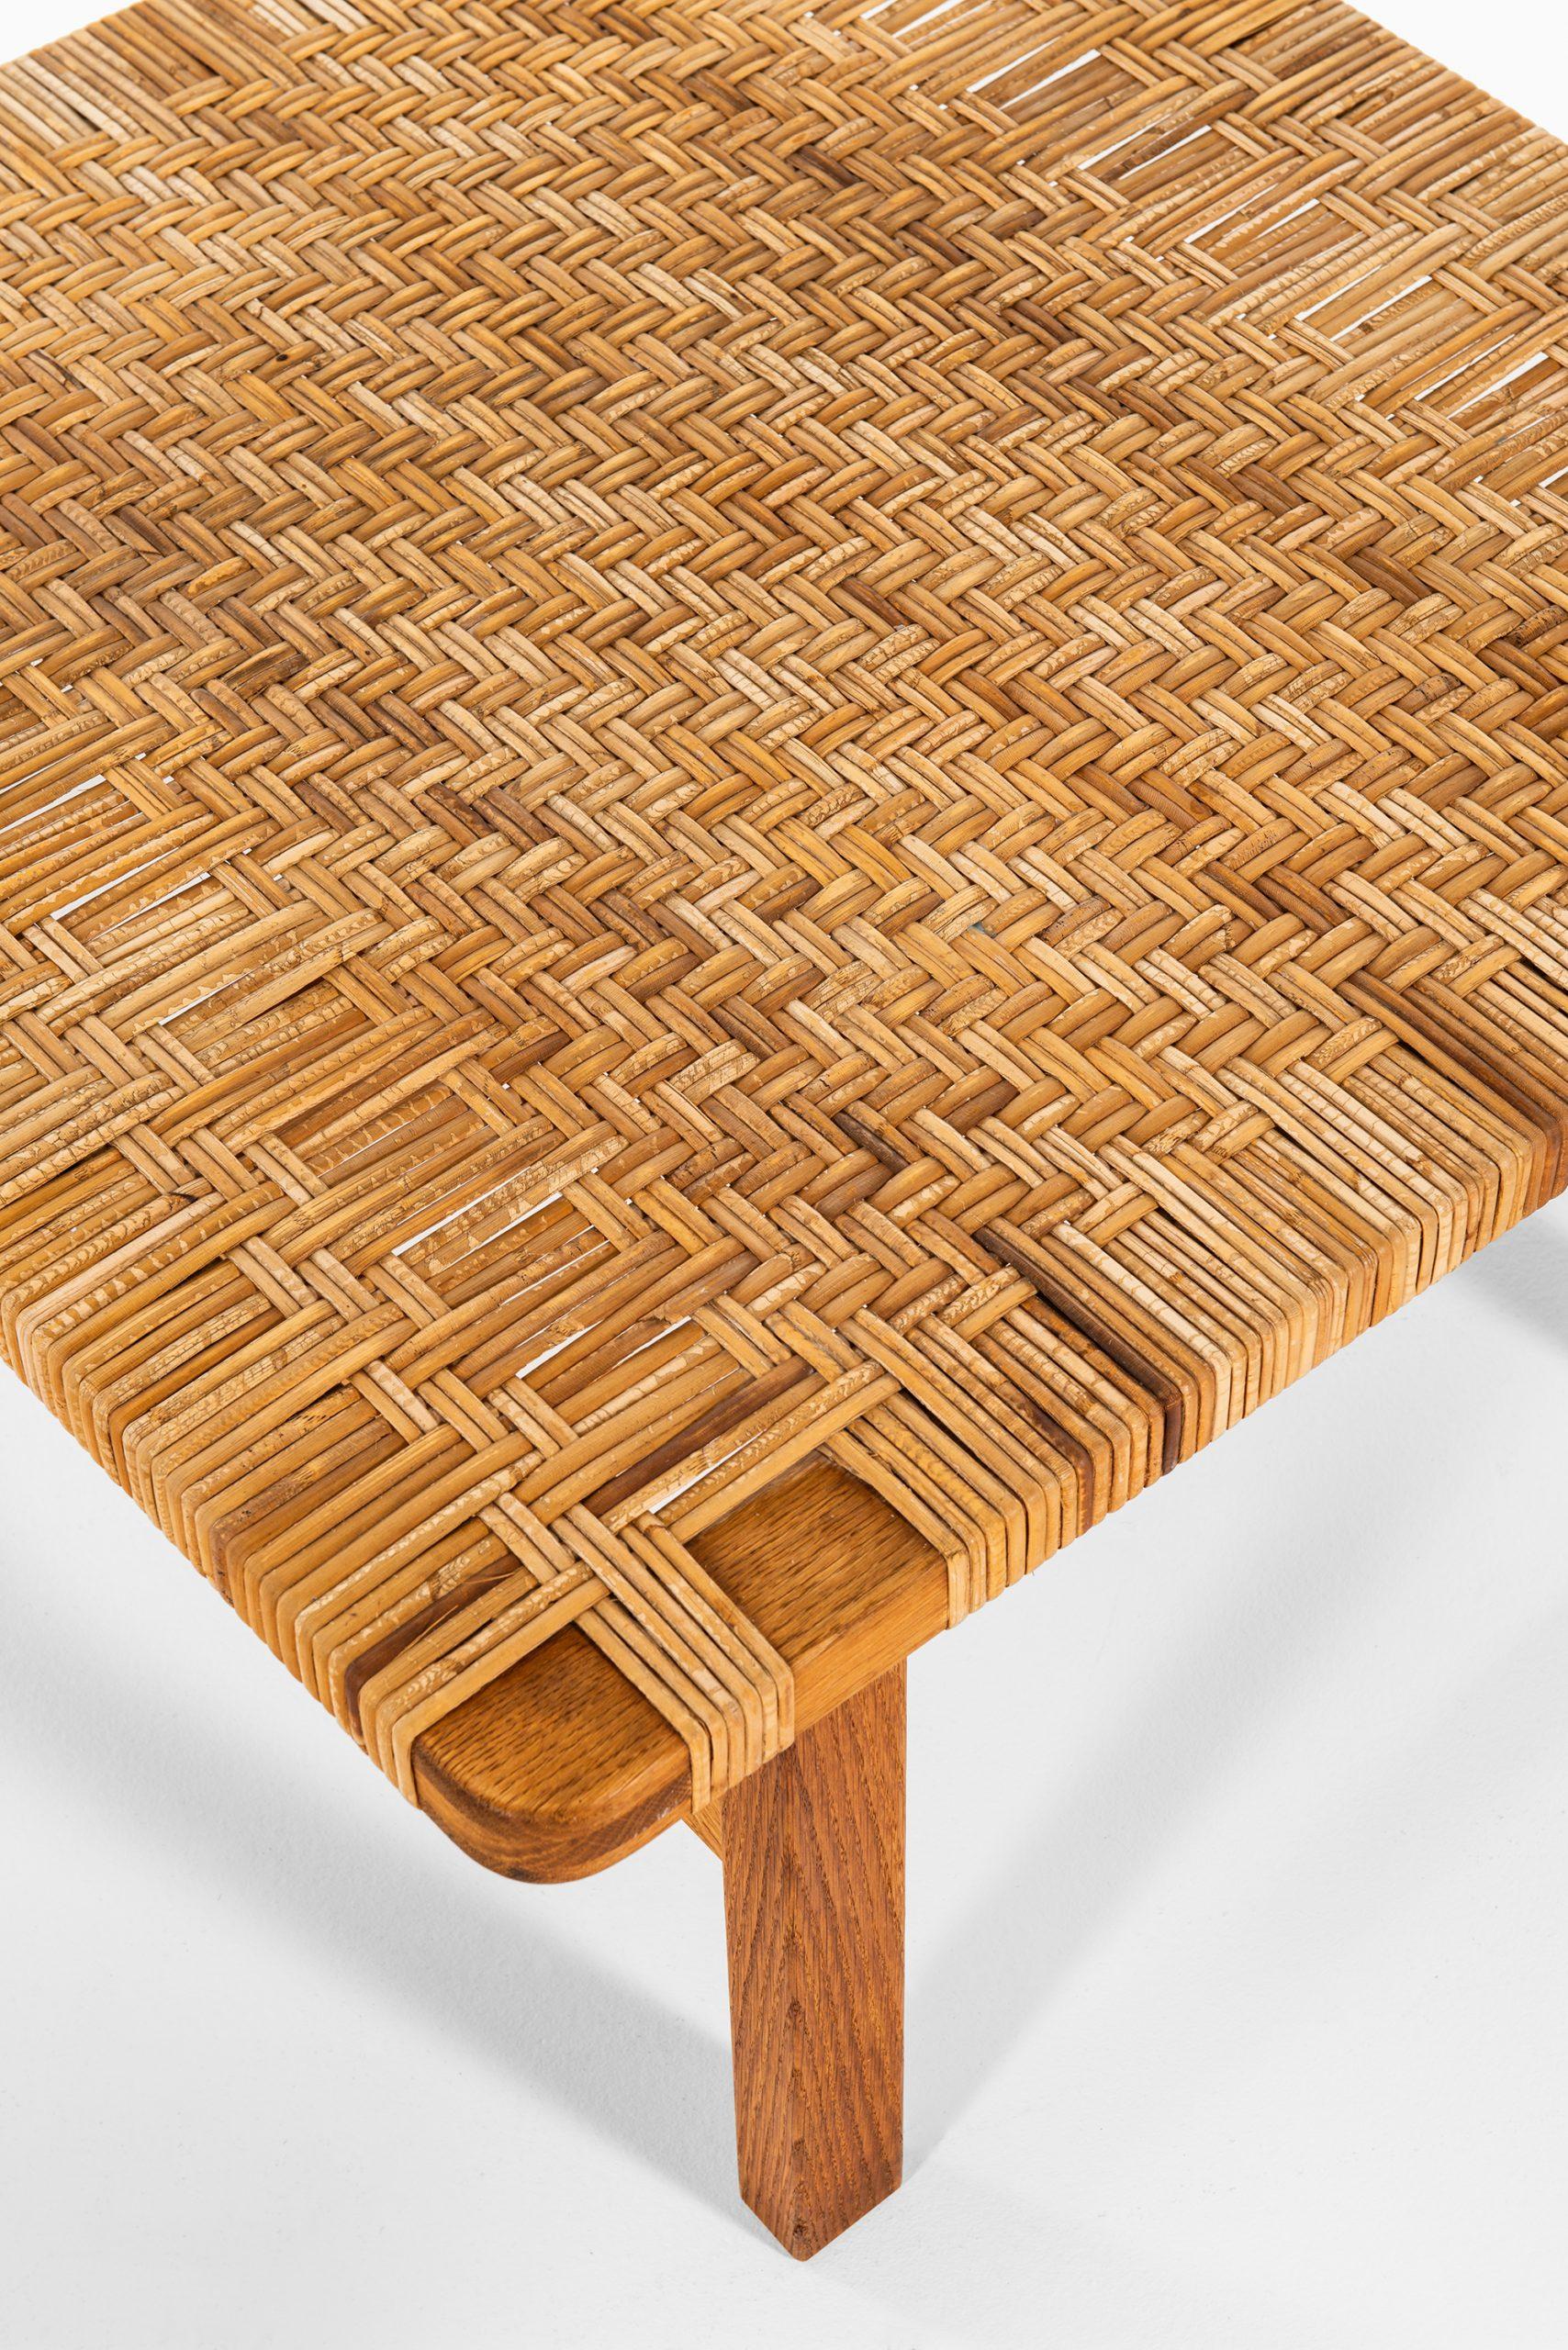 Oak Børge Mogensen Side Tables / Benches Model 5274 by Fredericia Stolefabrik